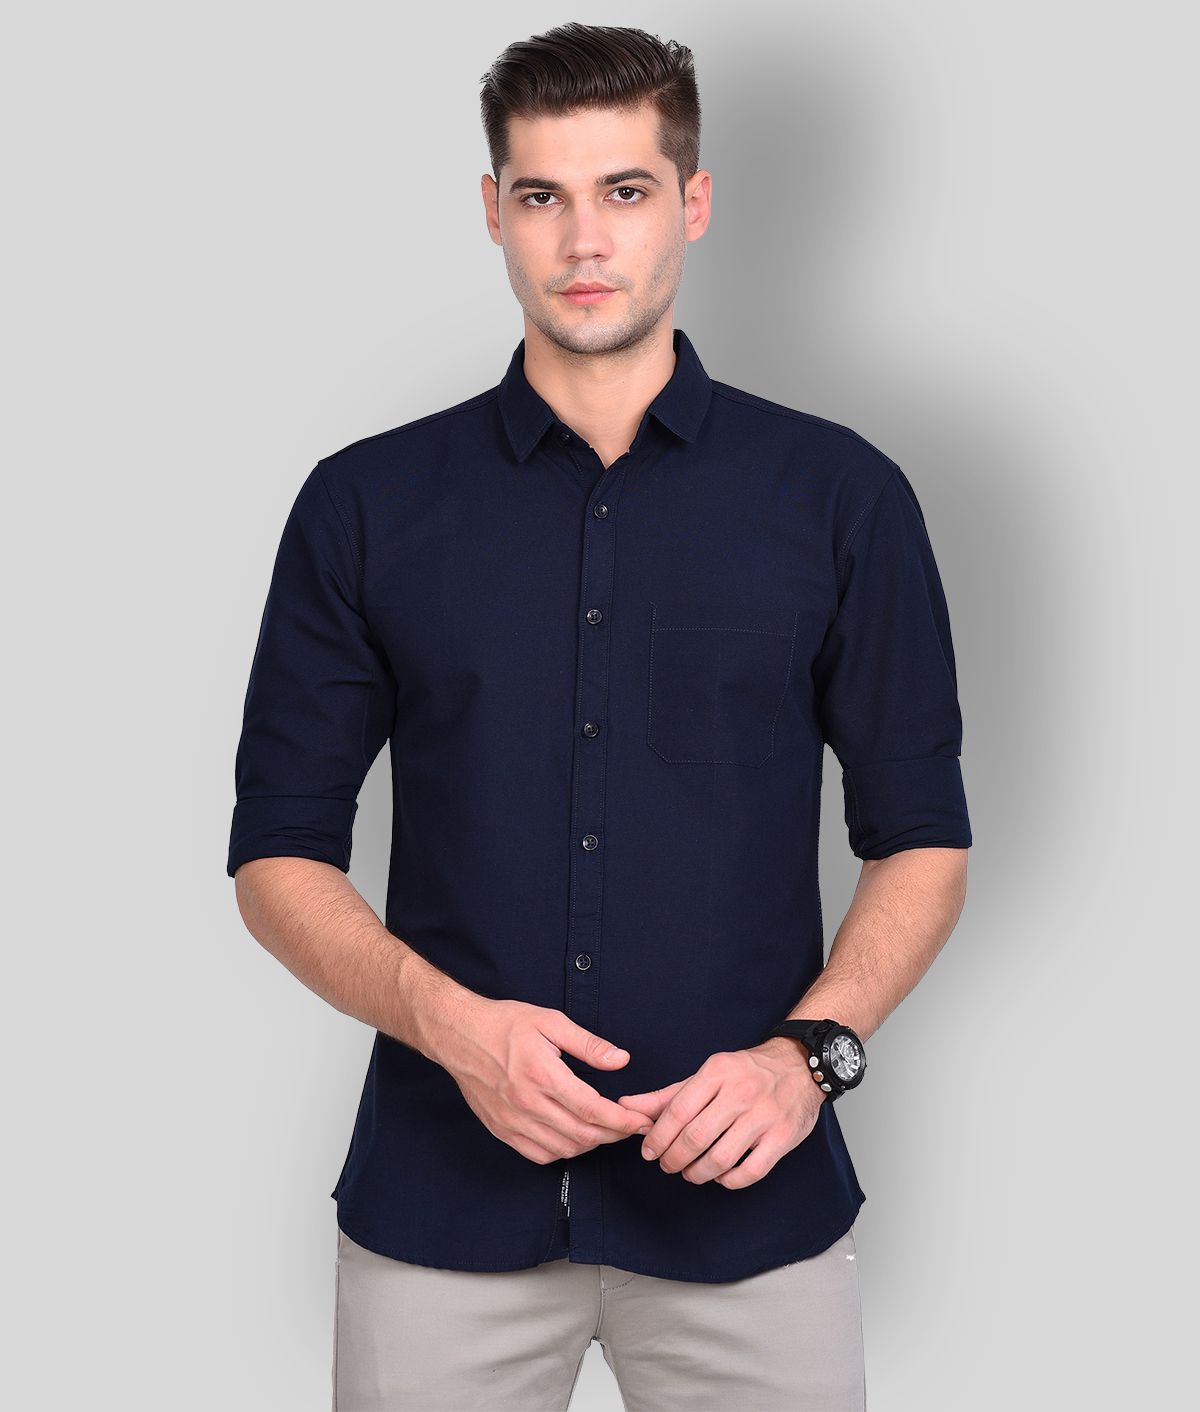 Paul Street - Blue Linen Slim Fit Men's Casual Shirt ( Pack of 1 )